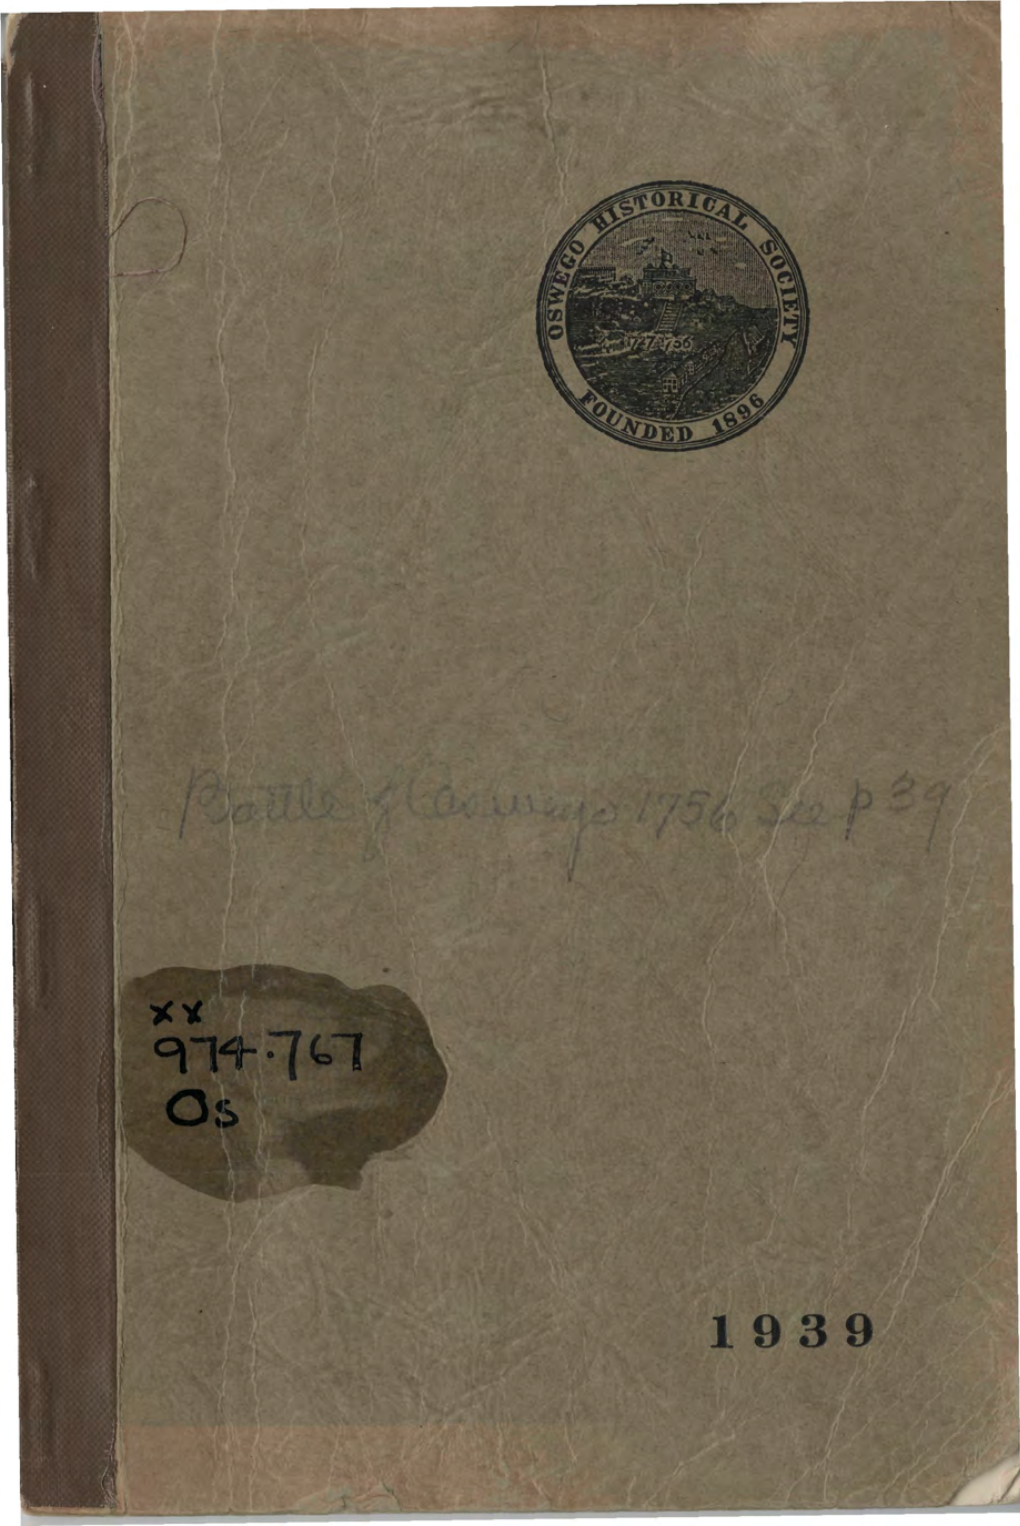 1939 Third Publication of the Oswego Historical Society